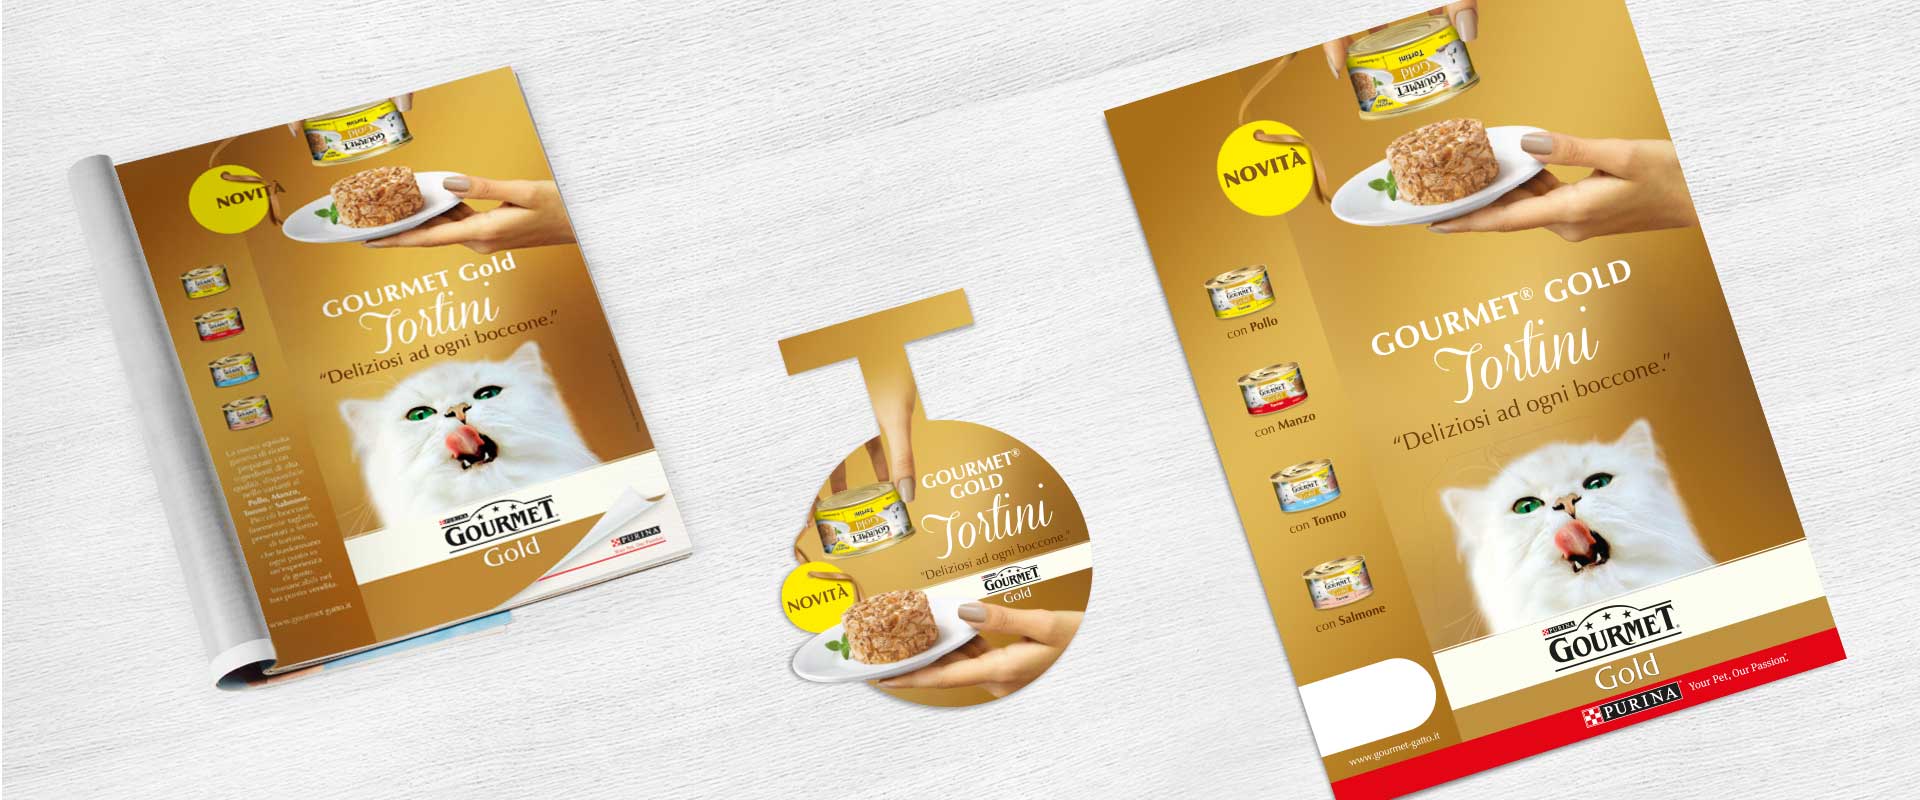 Gourmet Gold Tortini Italian launch